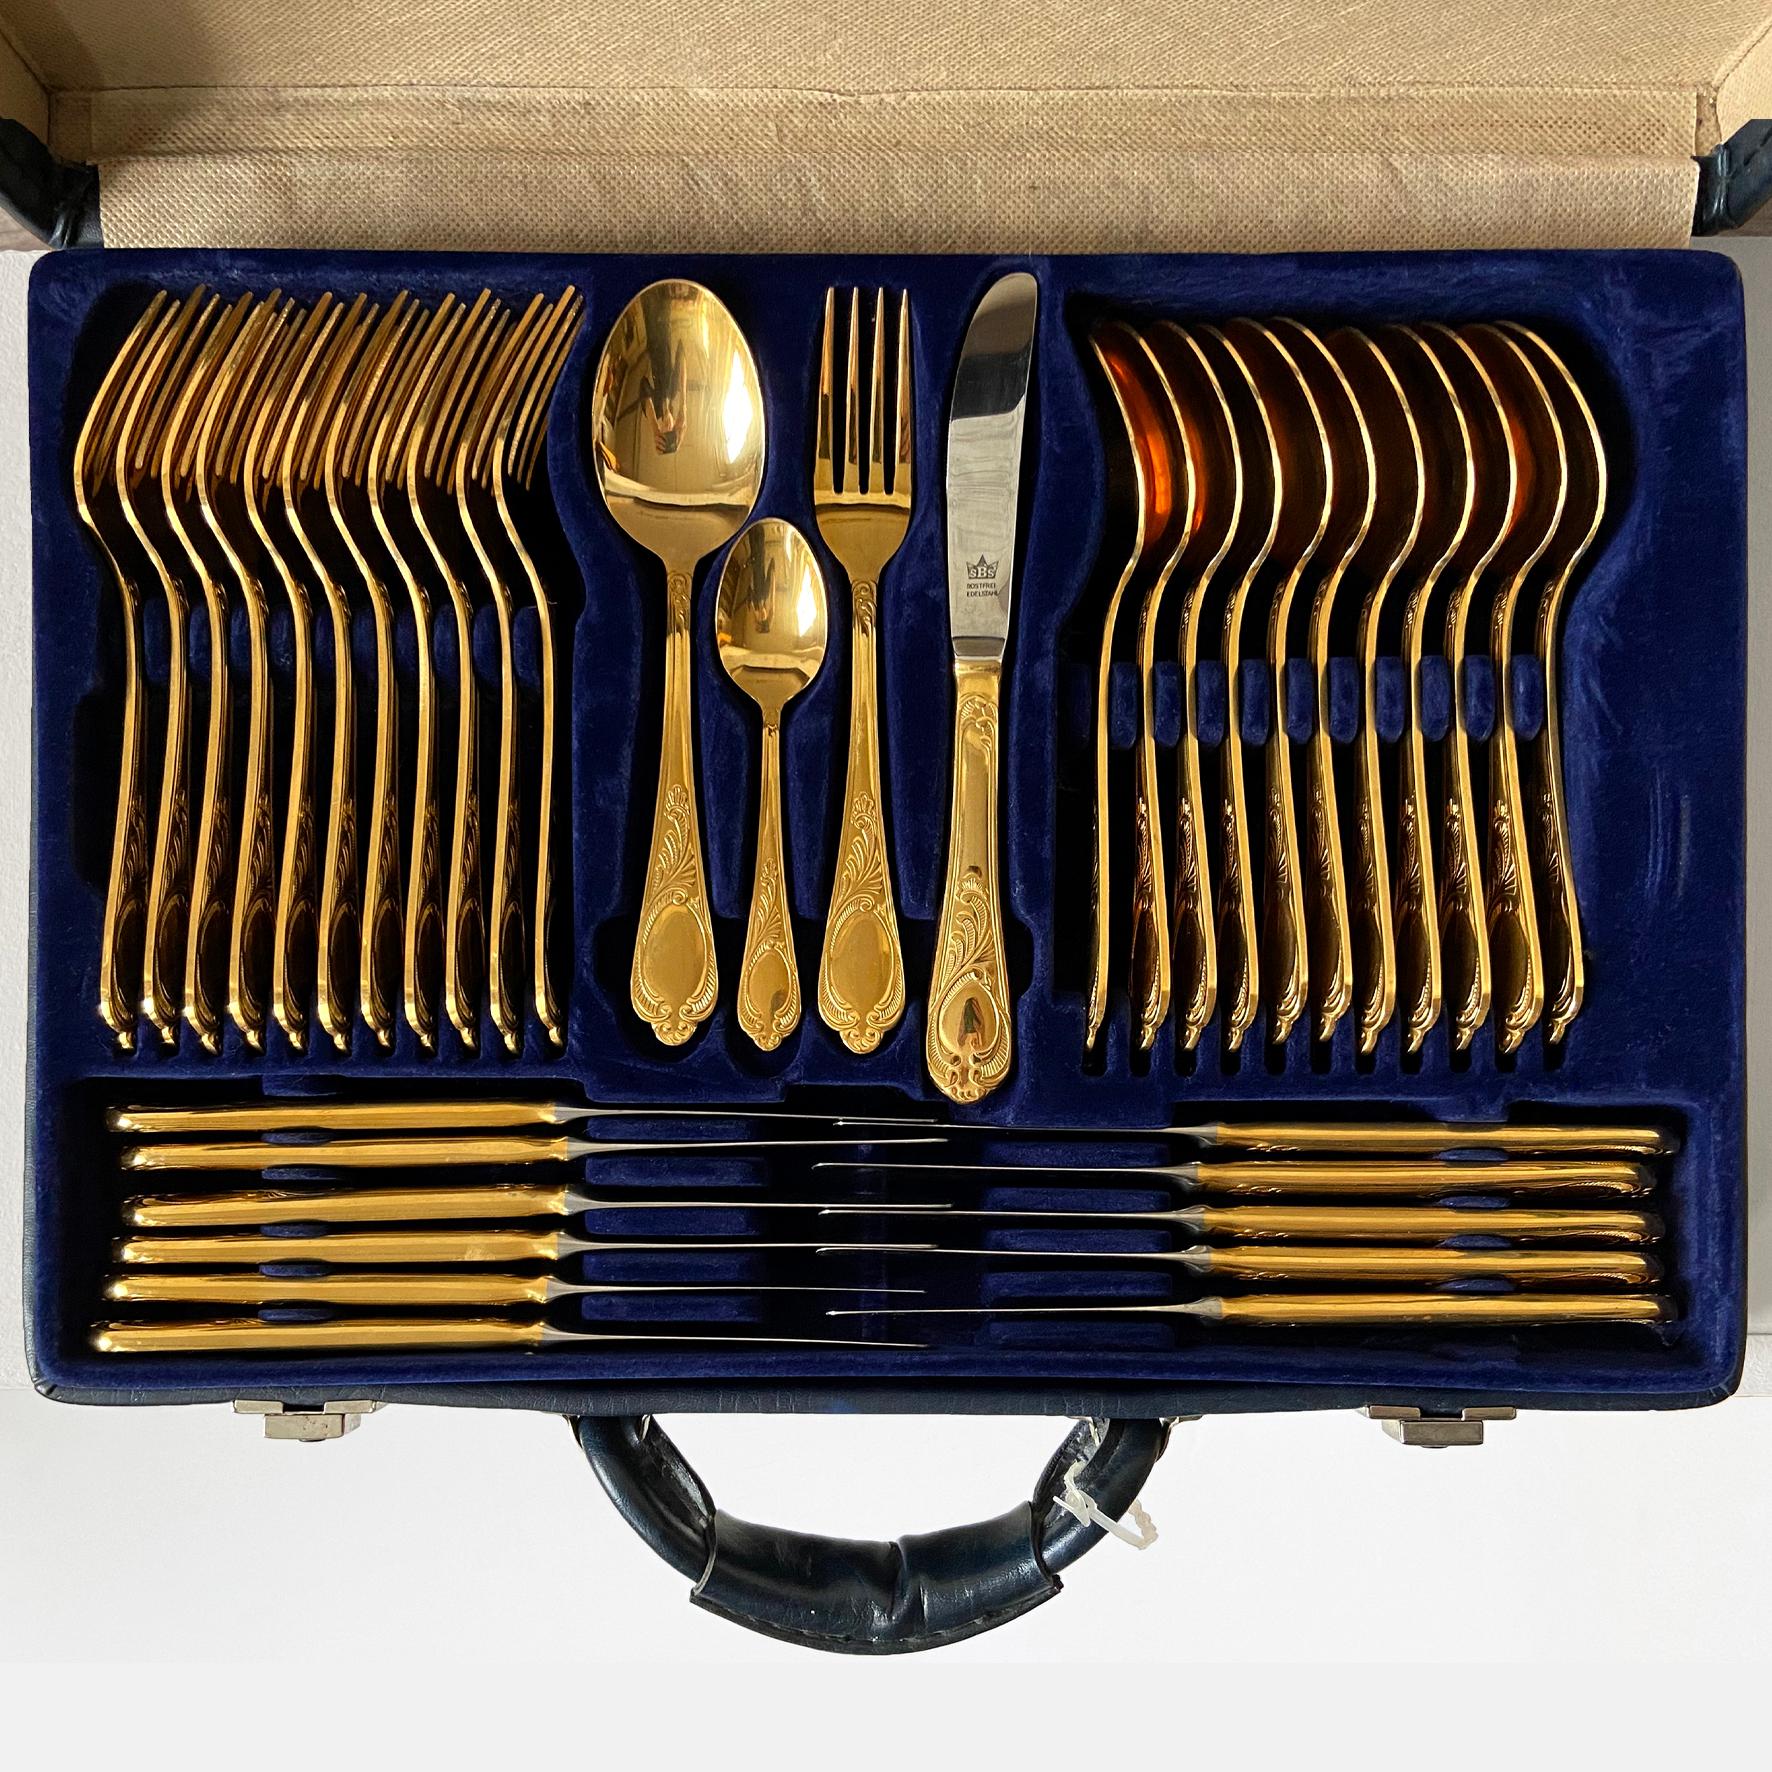 Bestecke Solingen German 23/24 Karat Gold-Plated 70pcs / 12 Person Cutlery Set For Sale 6